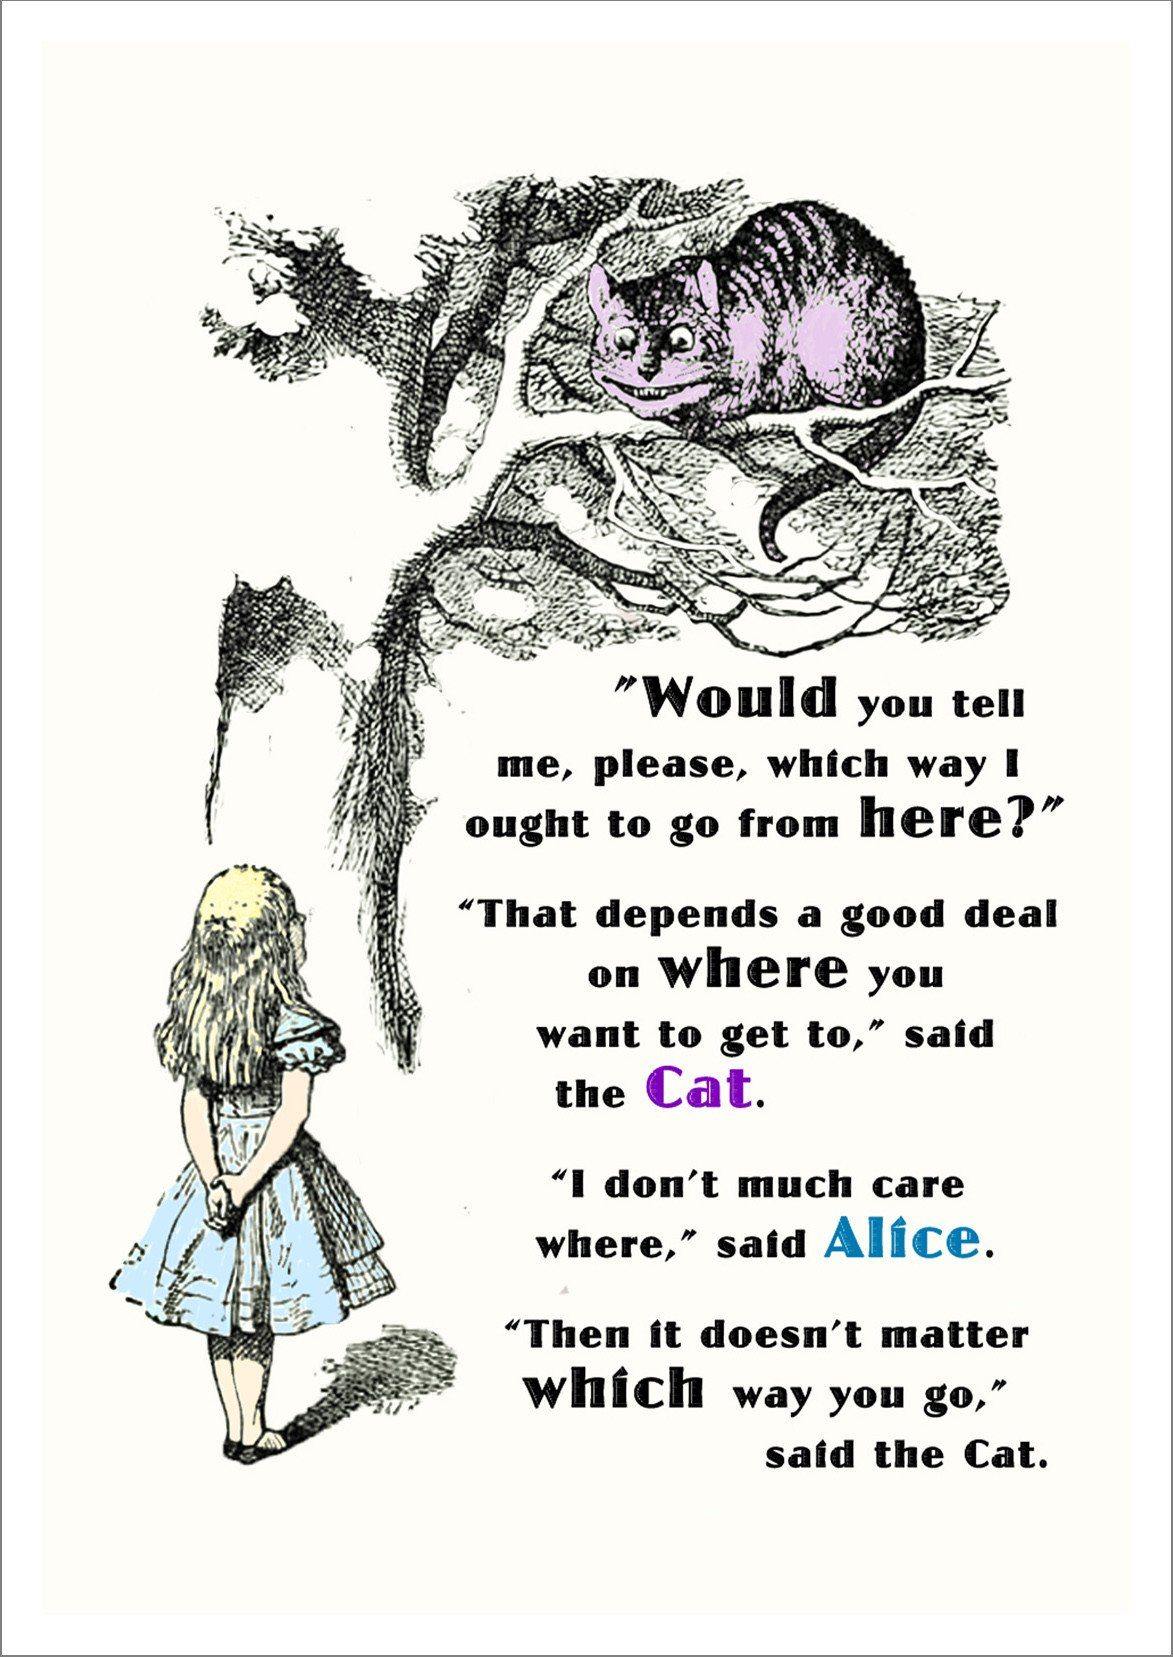 CHESHIRE CAT PRINT: Vintage Alice in Wonderland 'Which Way' Illustration - Pimlico Prints